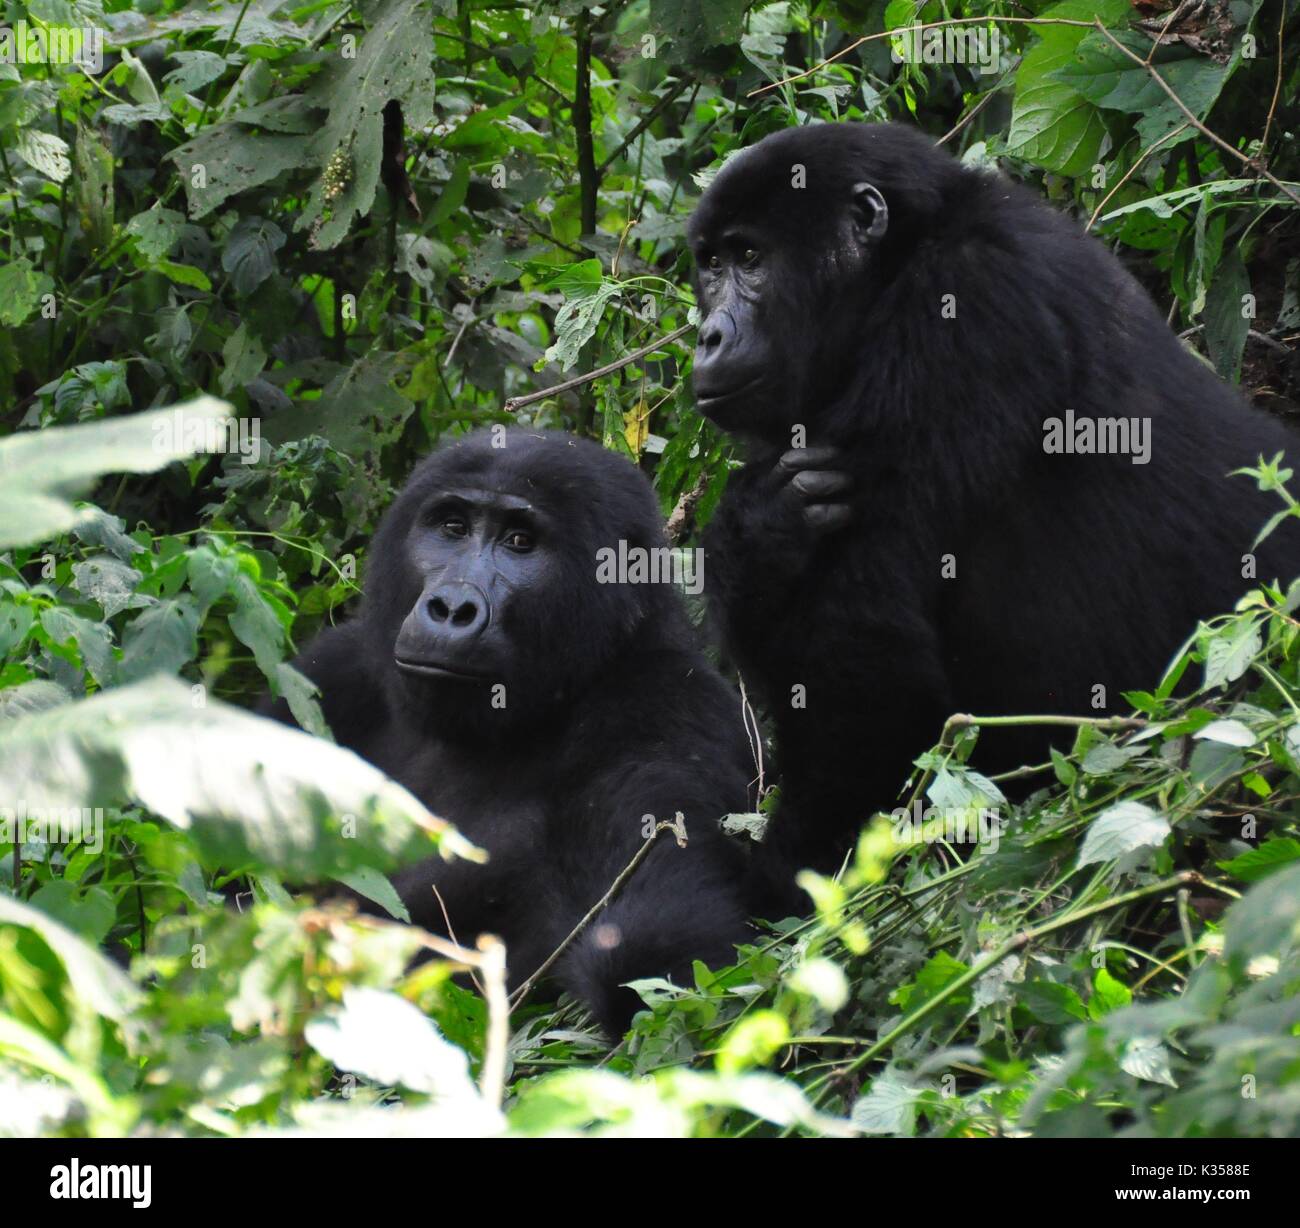 A pair of mountain gorillas, sitting in the dense bushes Stock Photo